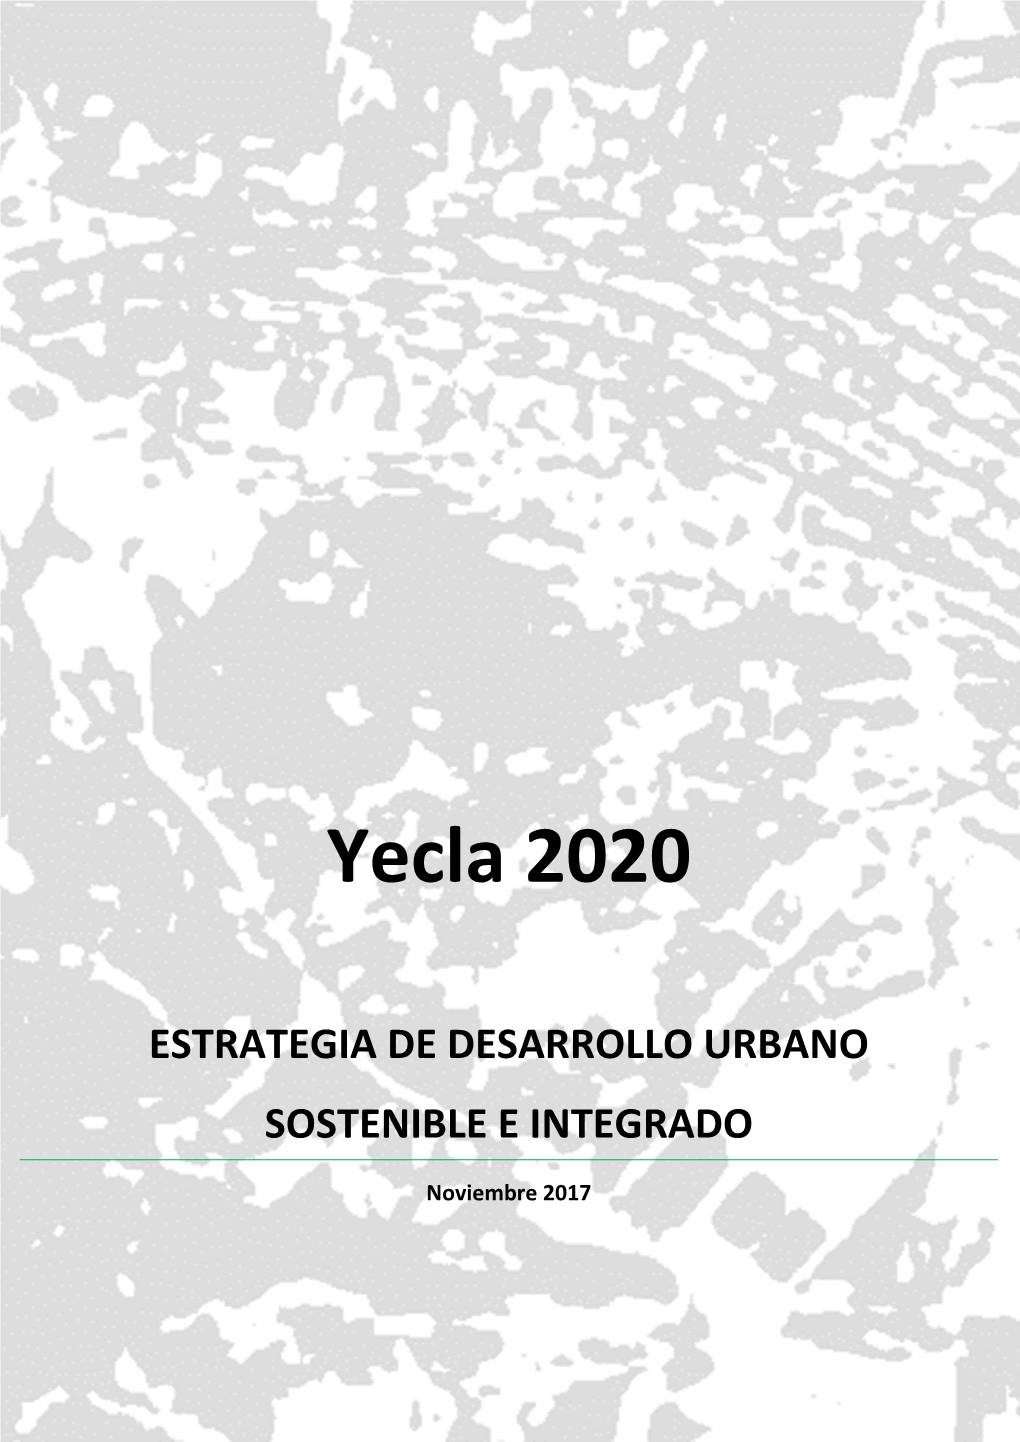 Estrategia De Desarrollo Urbano Sostenible E Integrado "Yecla 2020"